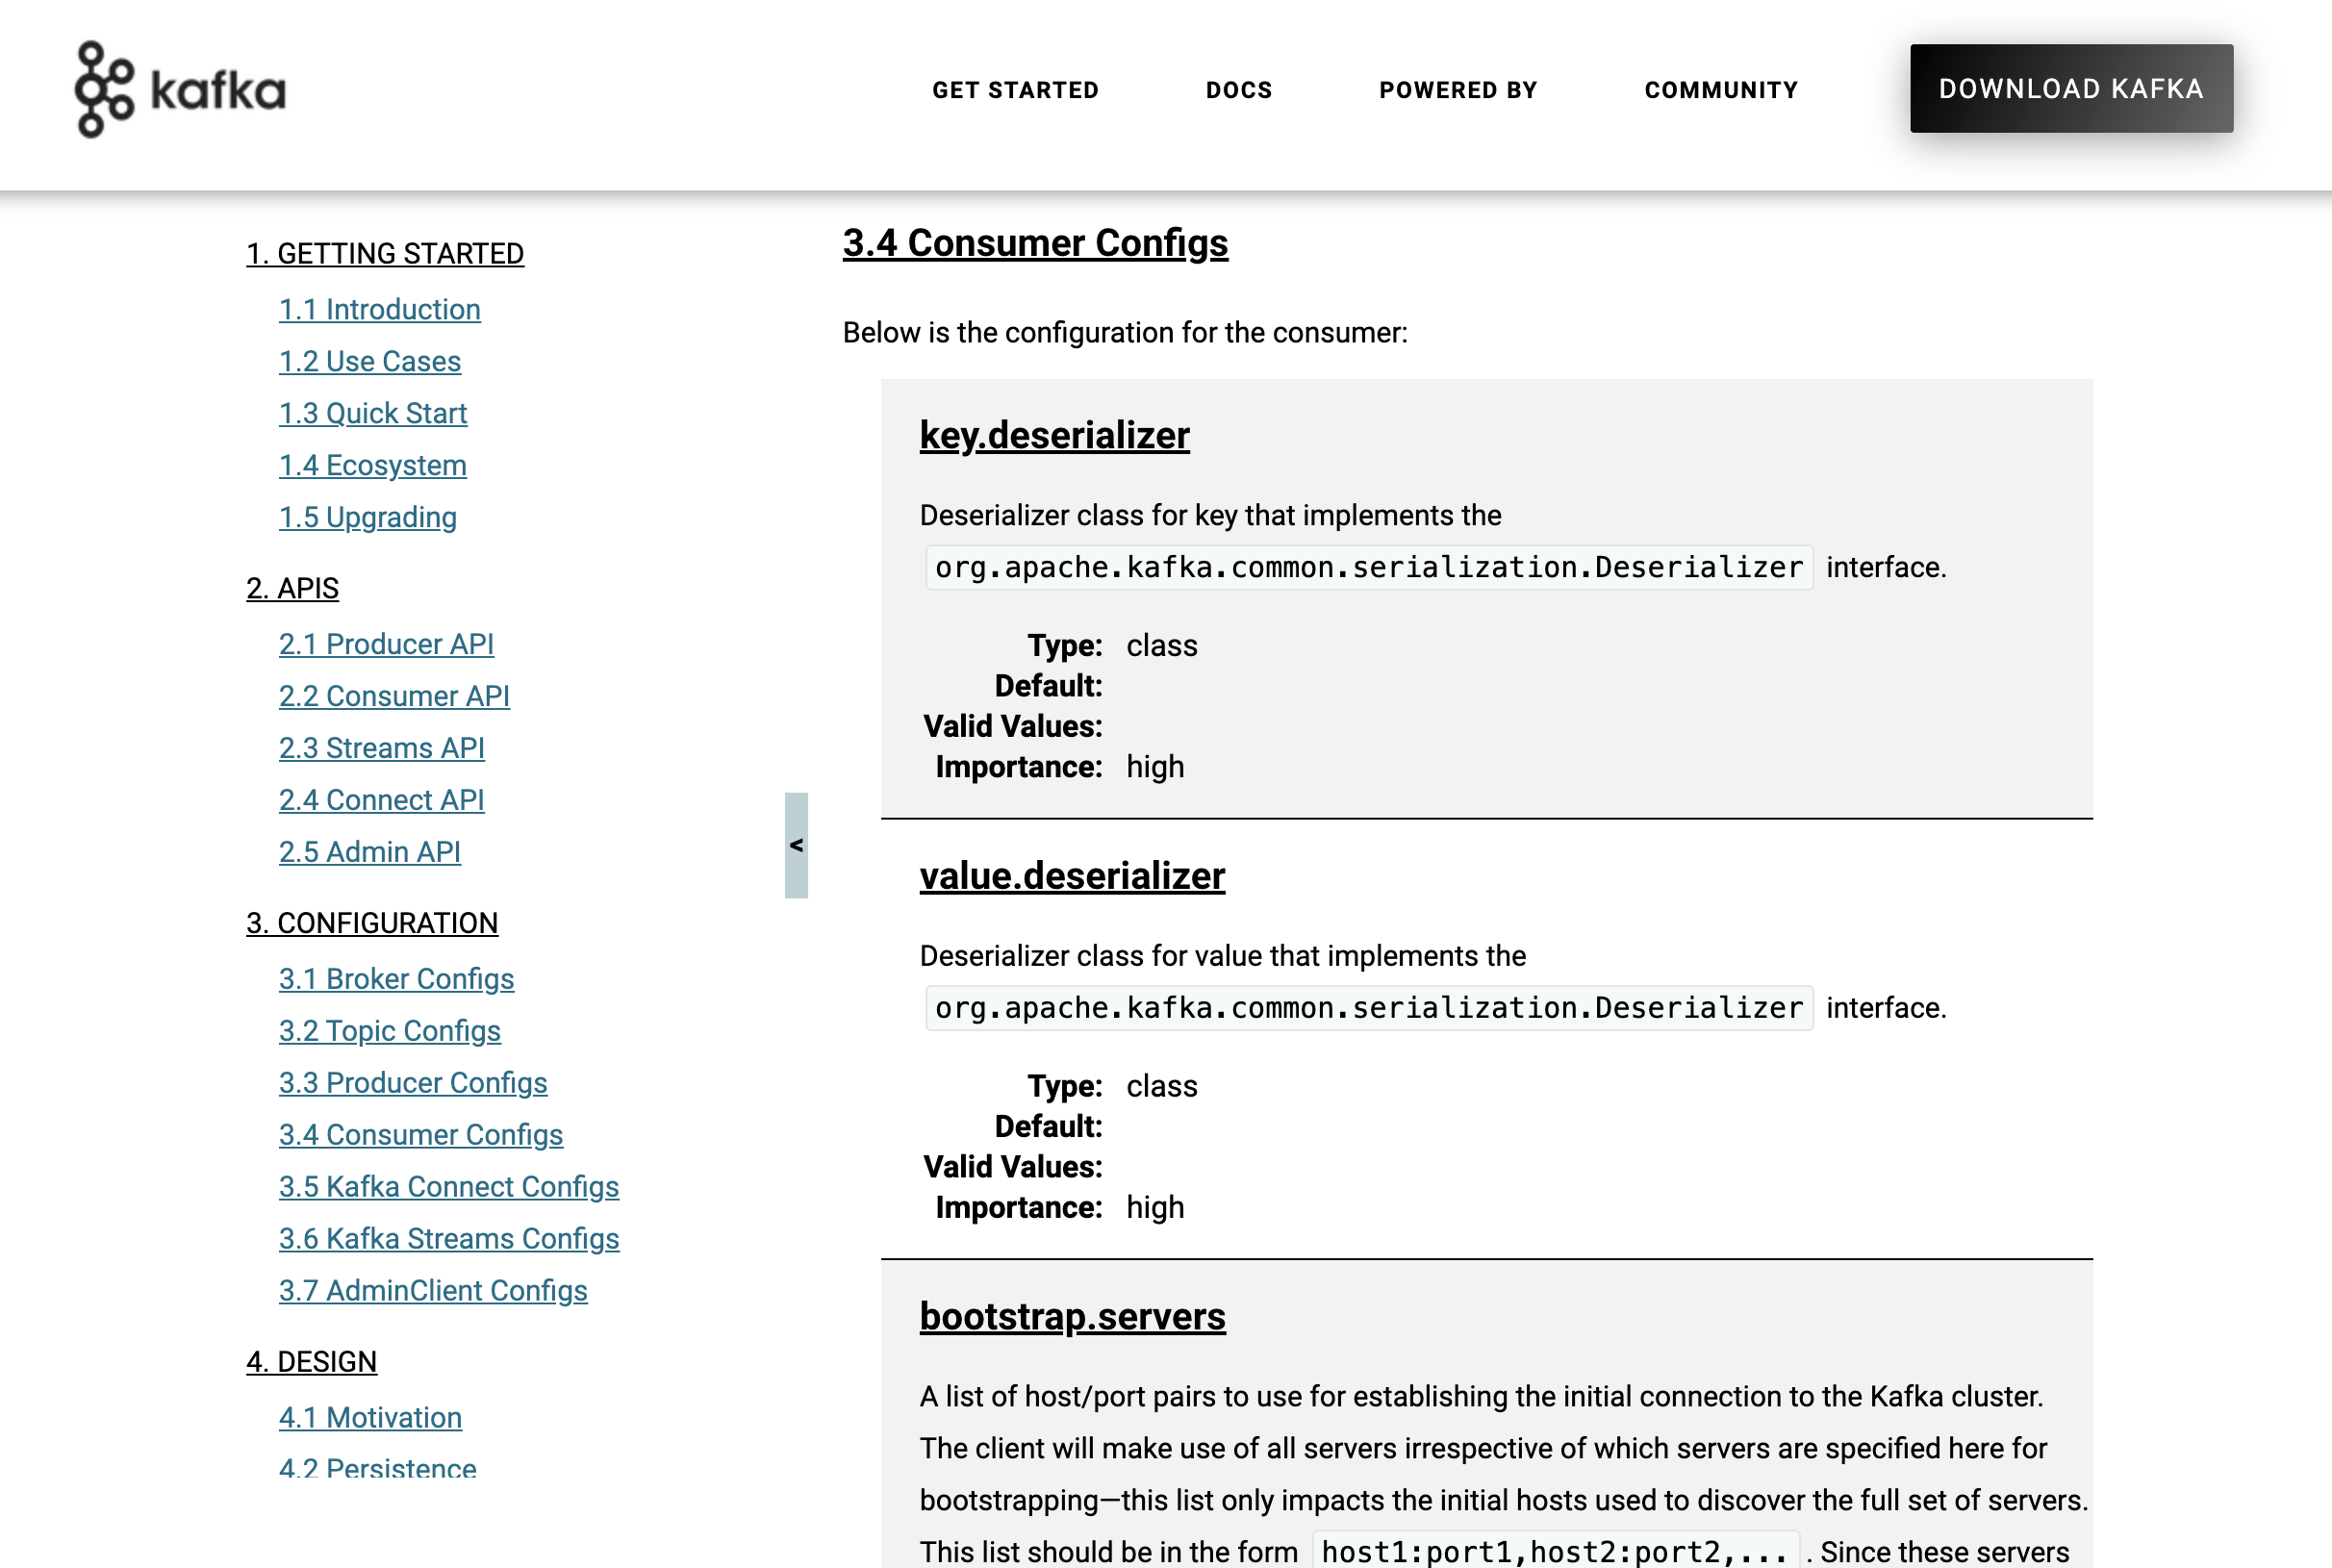 Screenshot showiong Kafka Consumer properties and configurations from apache.kafka.org